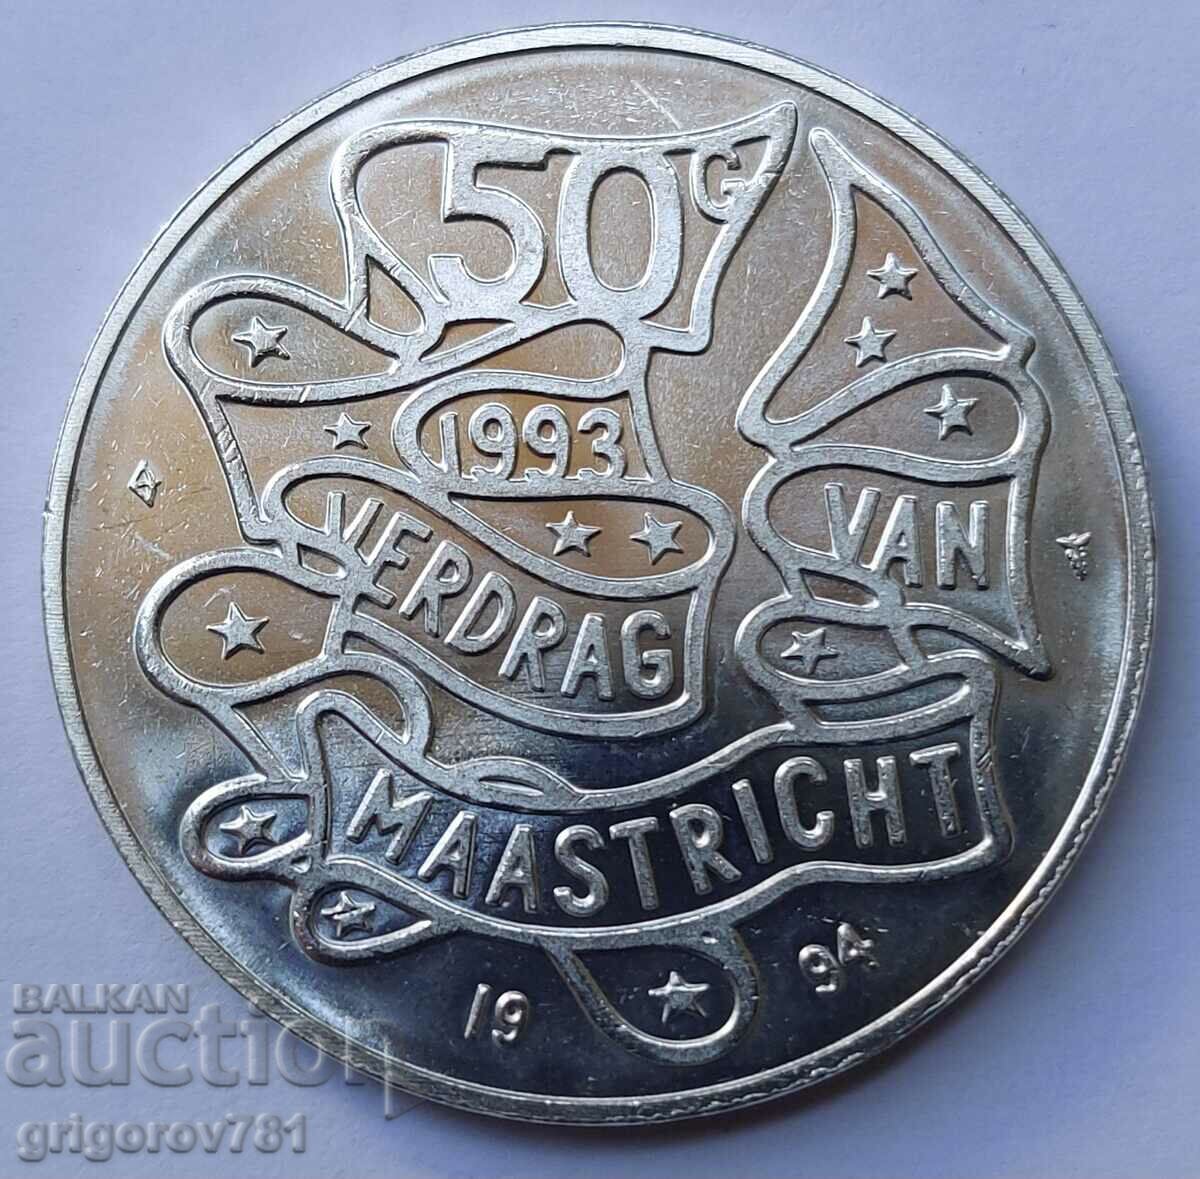 50 Guilder Silver Netherlands 1994 - Ασημένιο νόμισμα #1